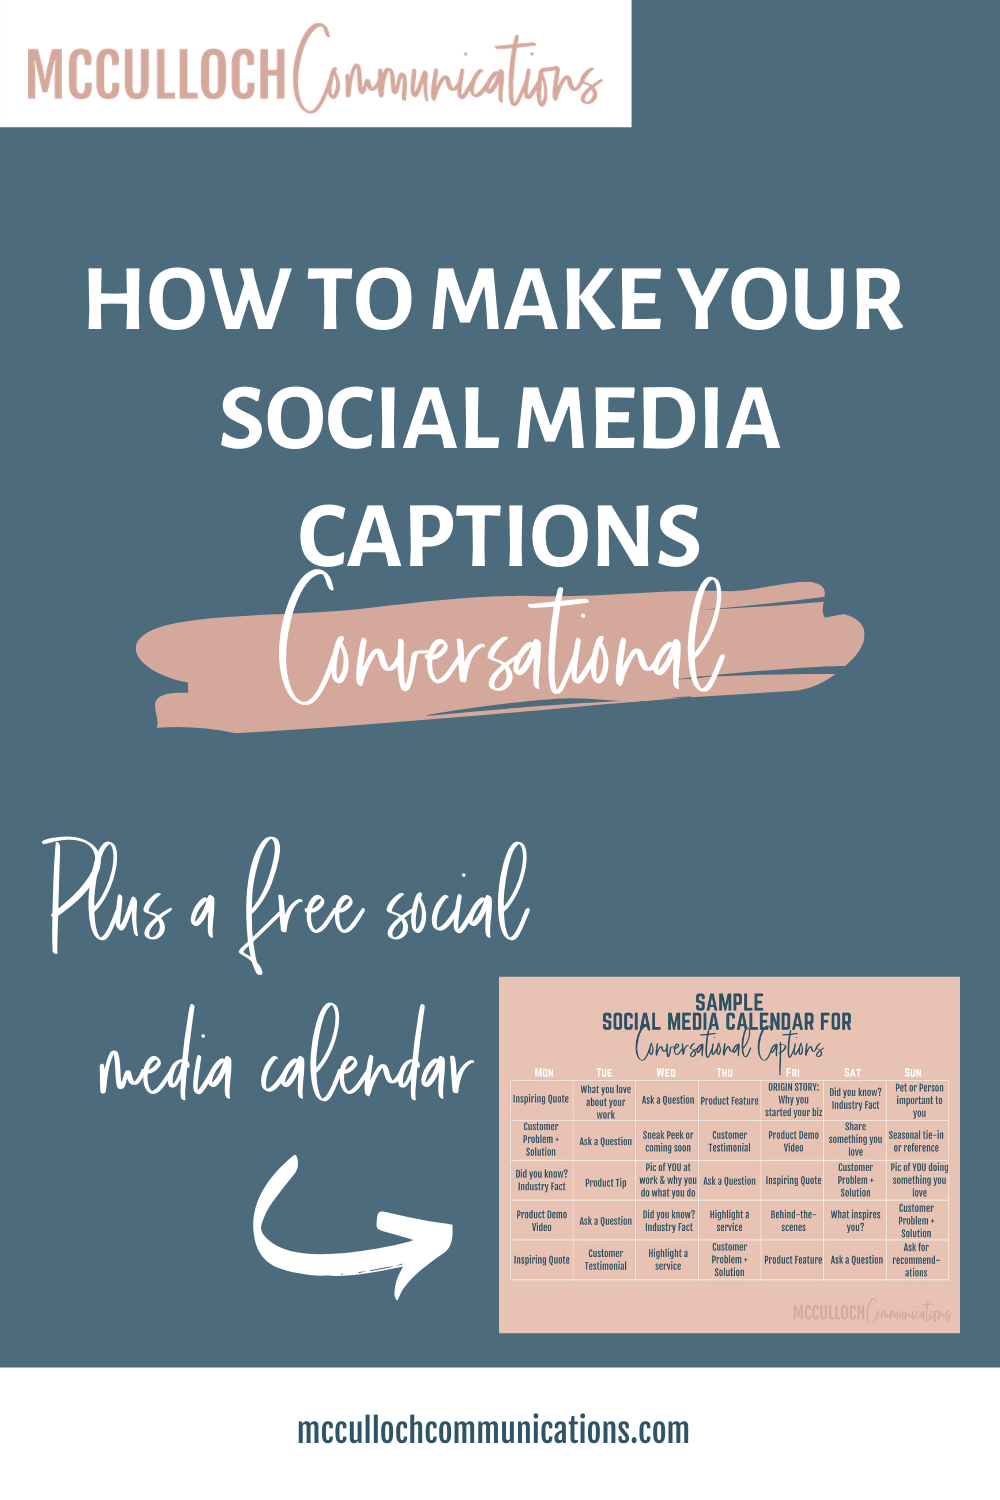 How to make your social media captions conversational